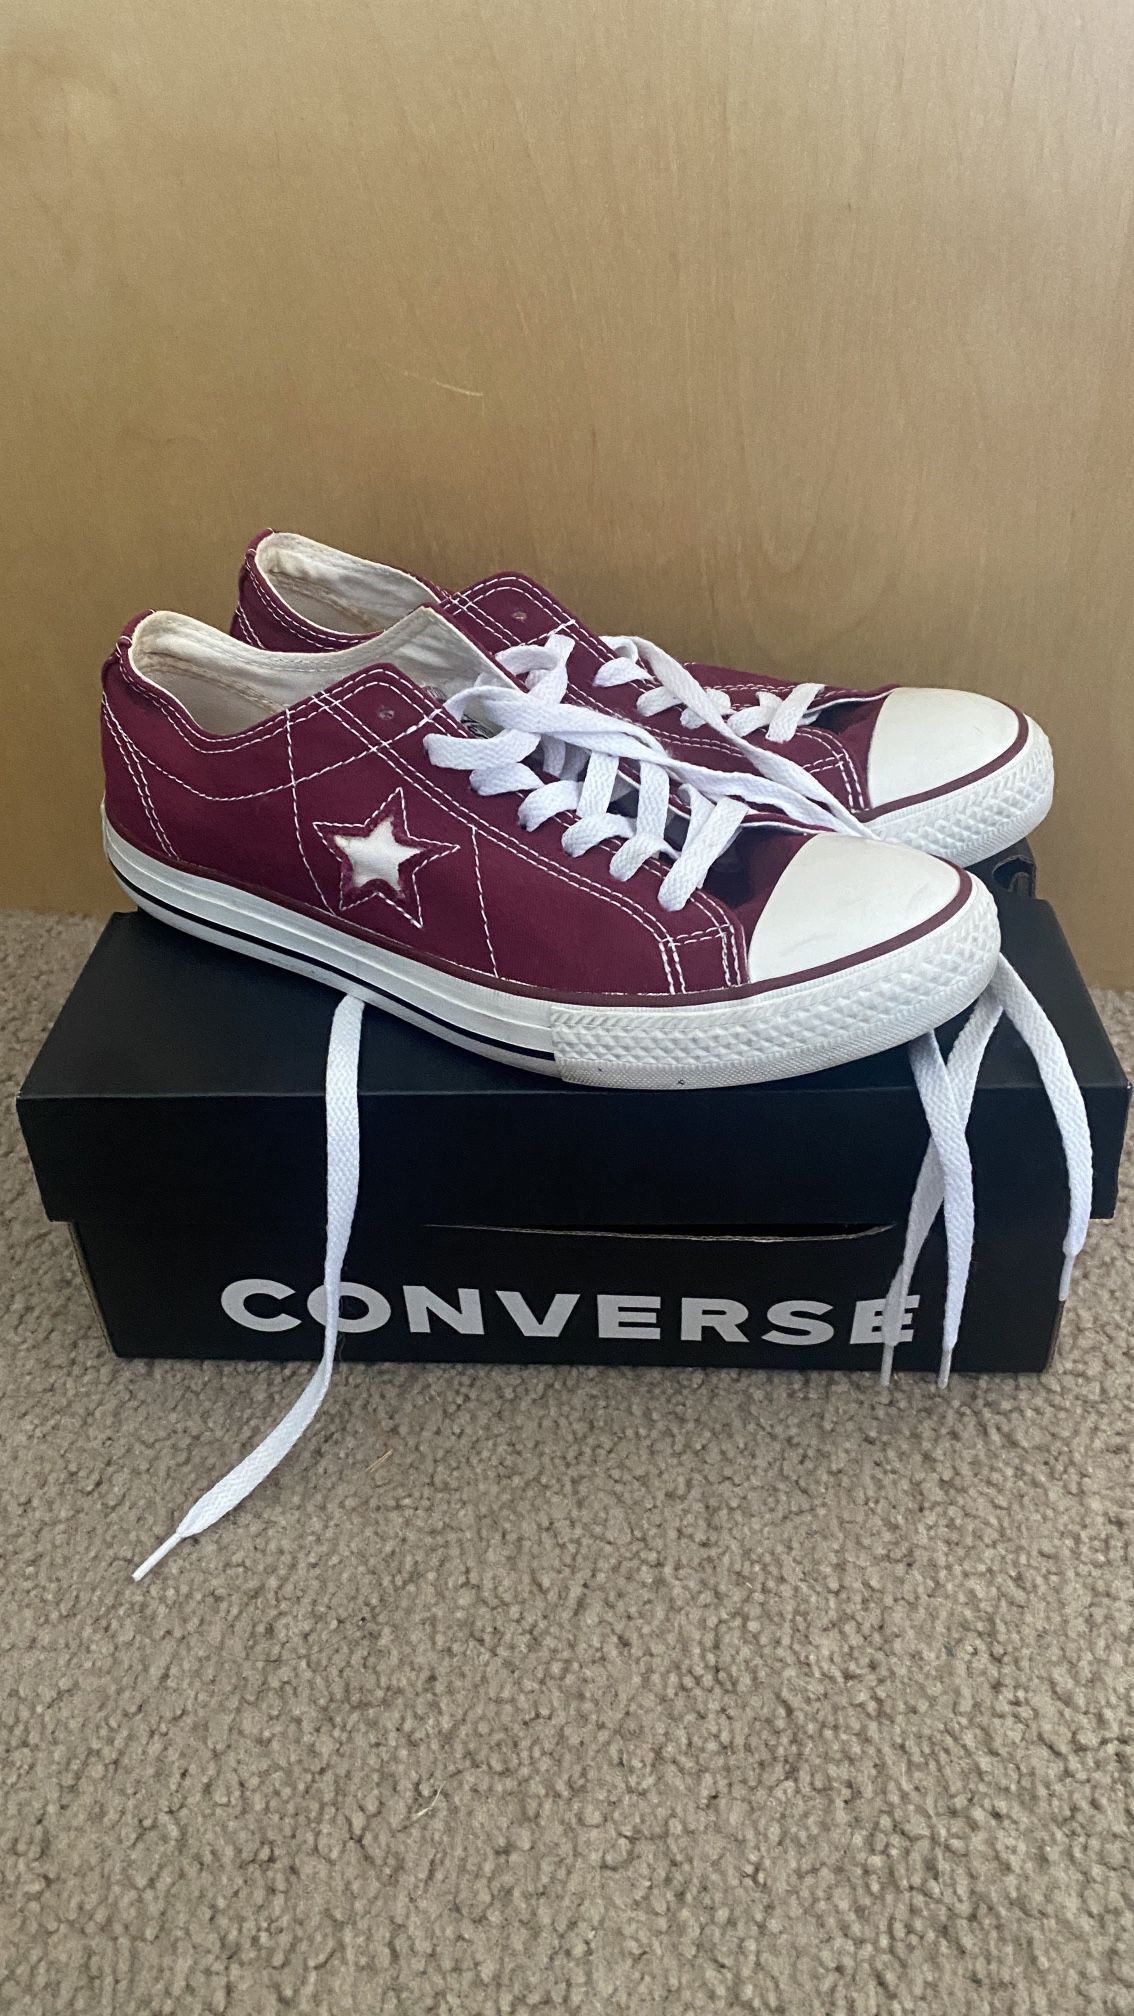 Converse All Stars Size 9.5